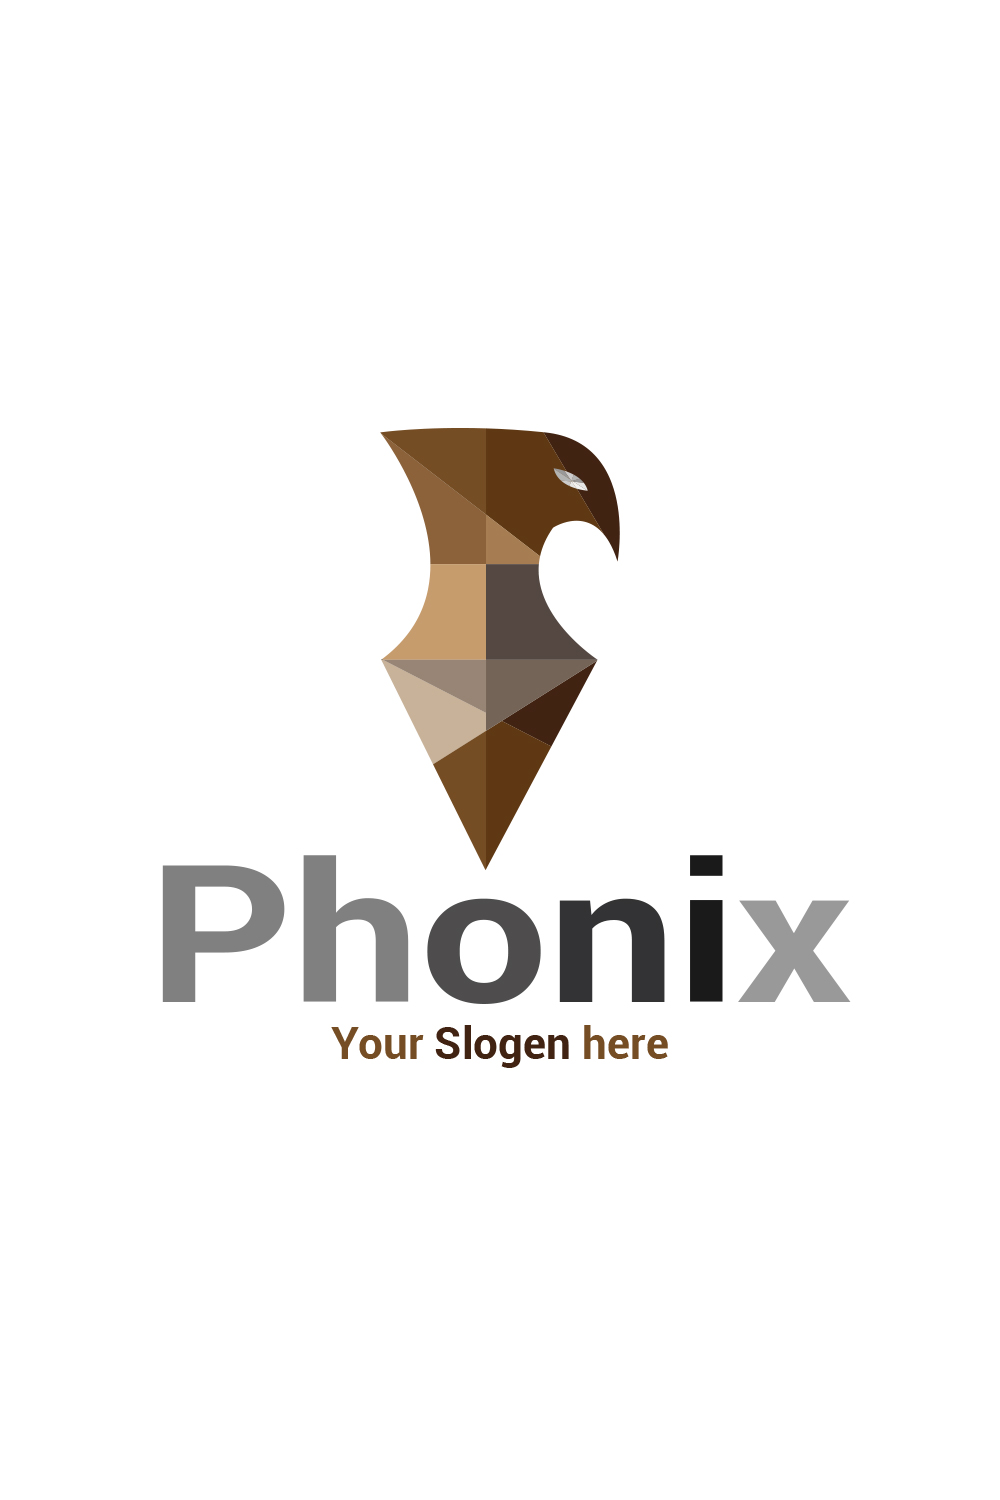 Phonix geometric logo design pinterest preview image.